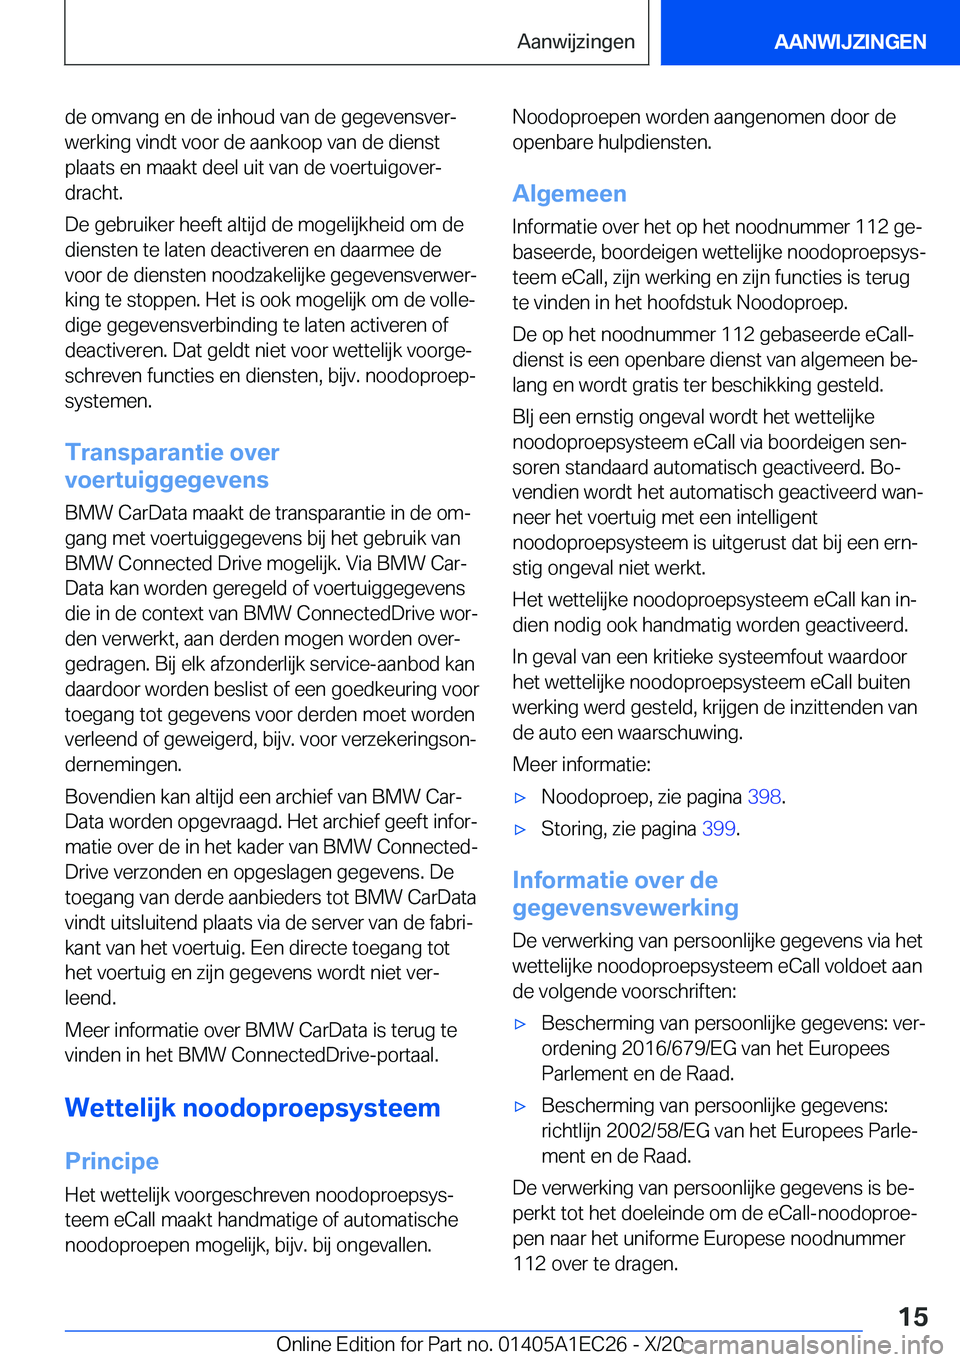 BMW 8 SERIES GRAN COUPE 2021  Instructieboekjes (in Dutch) �d�e��o�m�v�a�n�g��e�n��d�e��i�n�h�o�u�d��v�a�n��d�e��g�e�g�e�v�e�n�s�v�e�rj�w�e�r�k�i�n�g��v�i�n�d�t��v�o�o�r��d�e��a�a�n�k�o�o�p��v�a�n��d�e��d�i�e�n�s�t
�p�l�a�a�t�s��e�n��m�a�a�k�